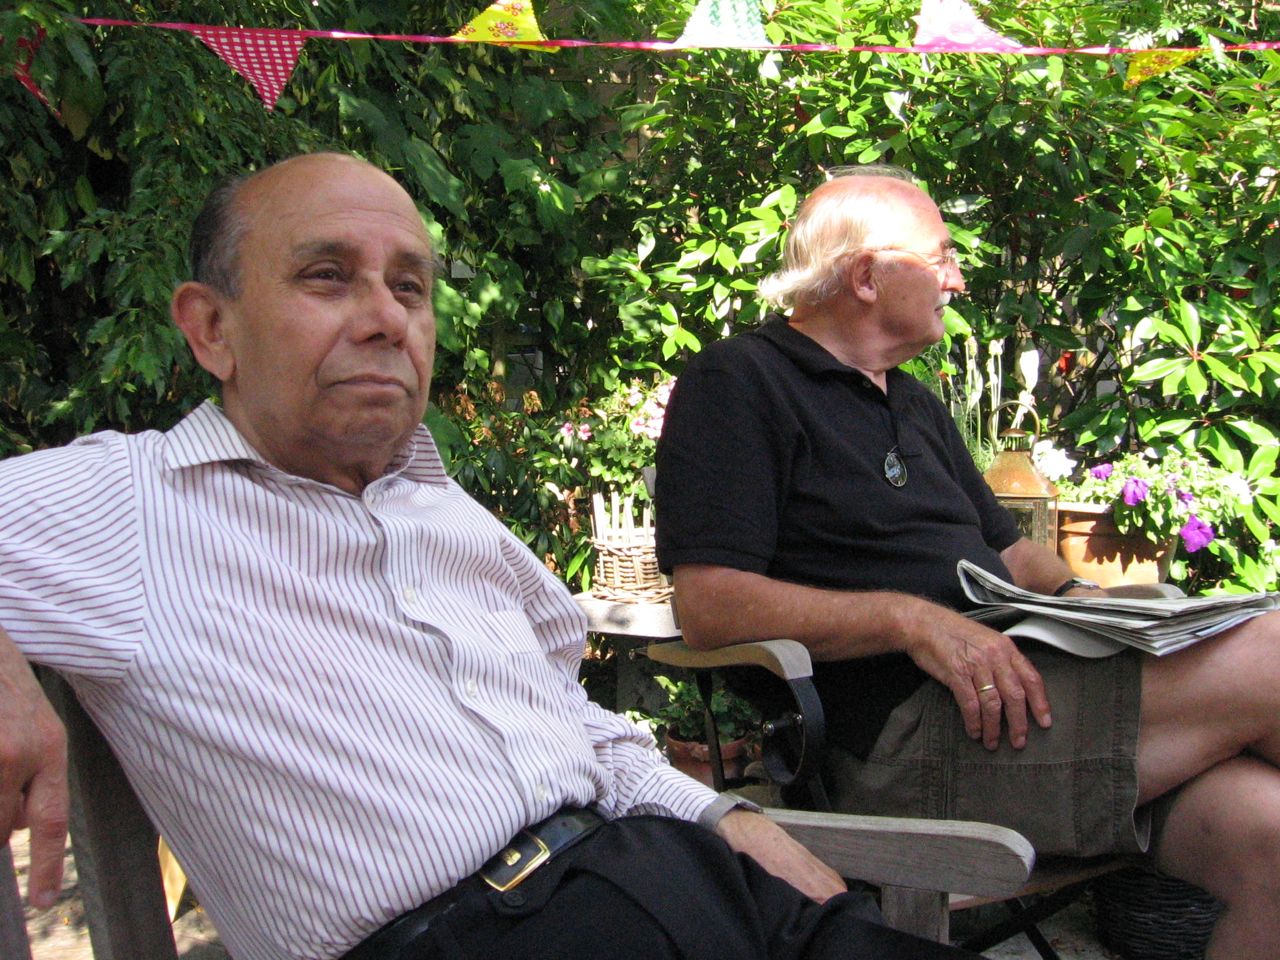 Mizan Rahman and Erik Koelink's father, NL 2009